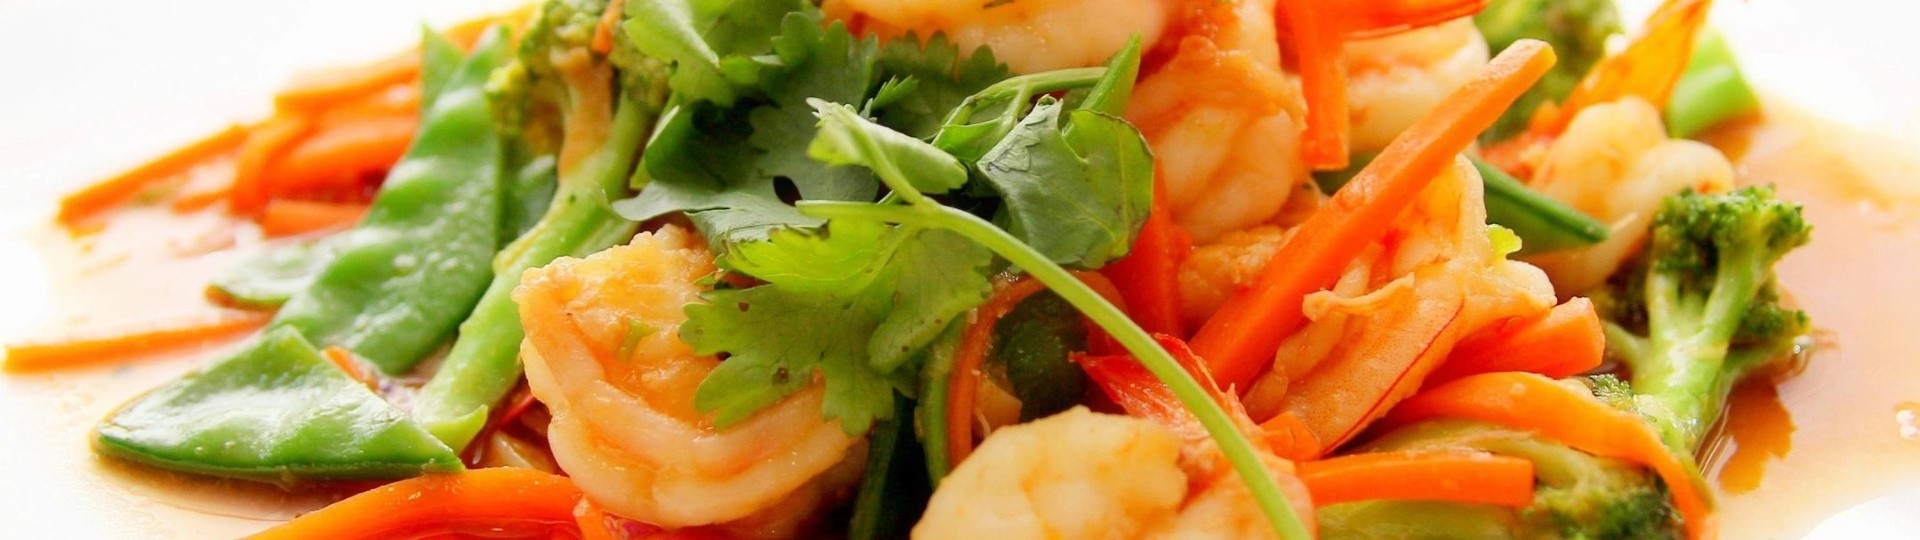 Shrimp stir-fried broccoli with carrot, Thai food